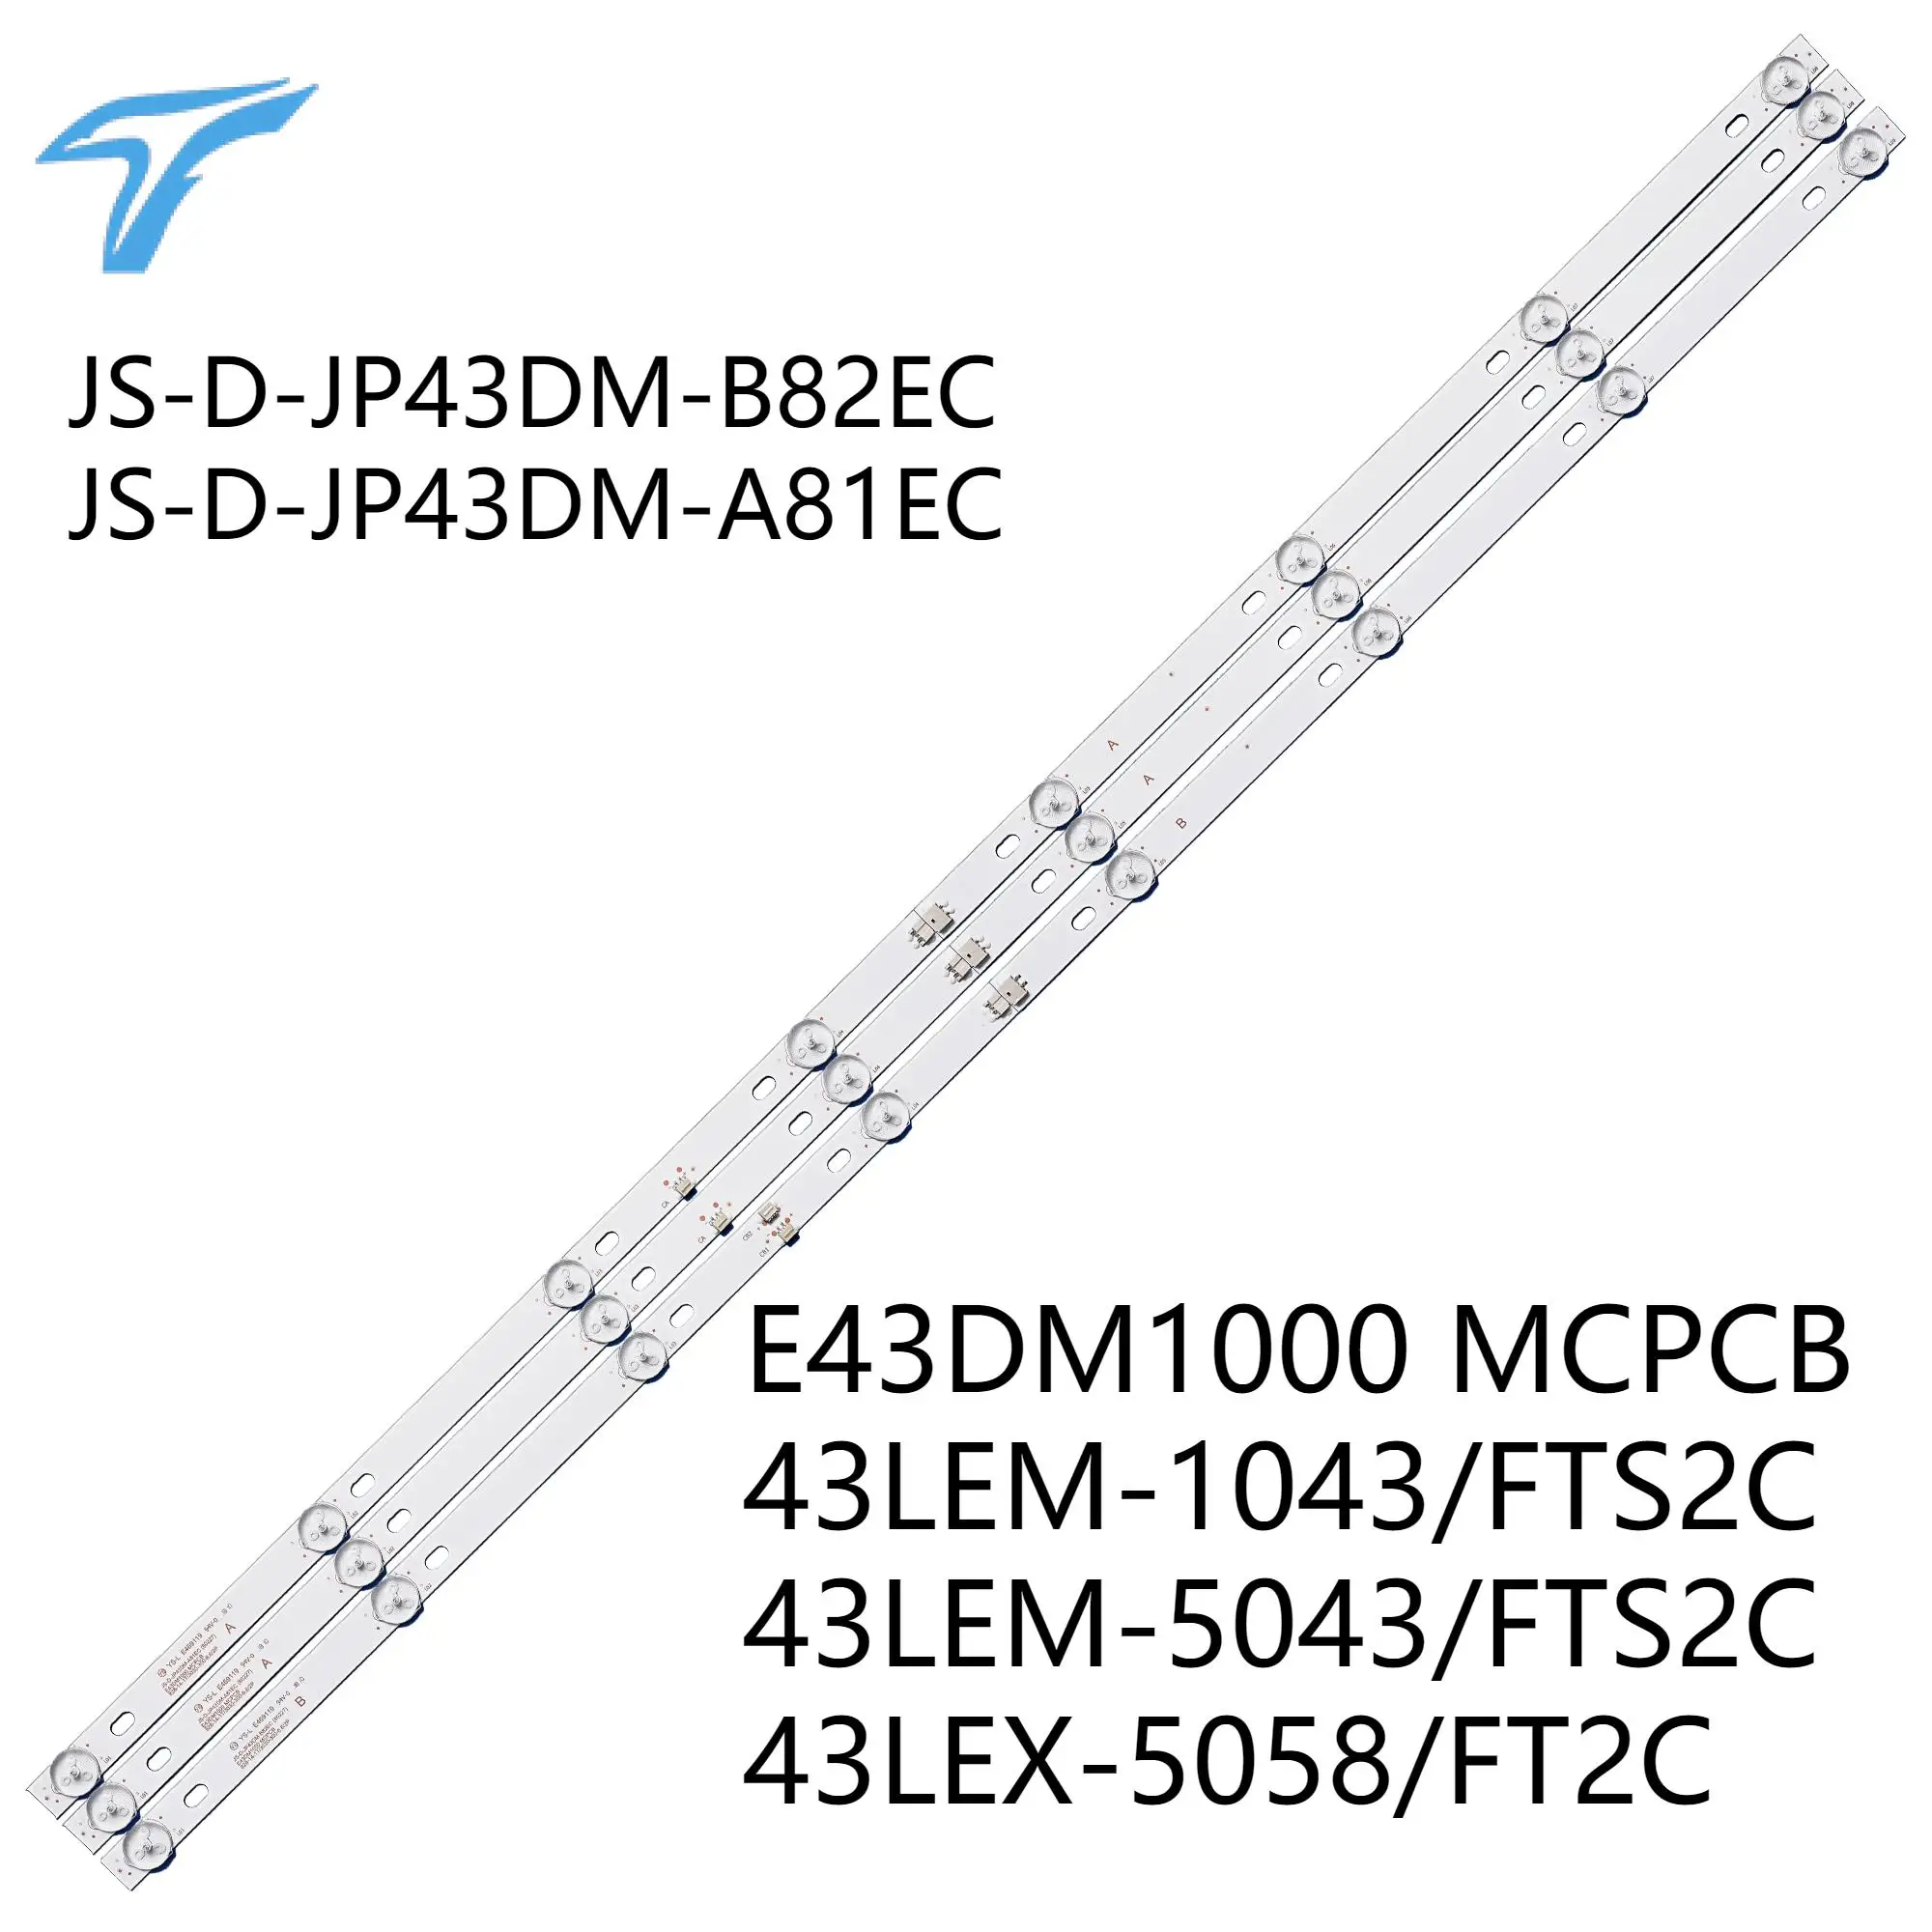 

LED backlight strip for BBK 43LEM-1043/FTS2C 43LEM-5043/FTS2C 43LEX-5058/FT2C JS-D-JP43DM-A81EC (80227) E43DM1000 MCPCB